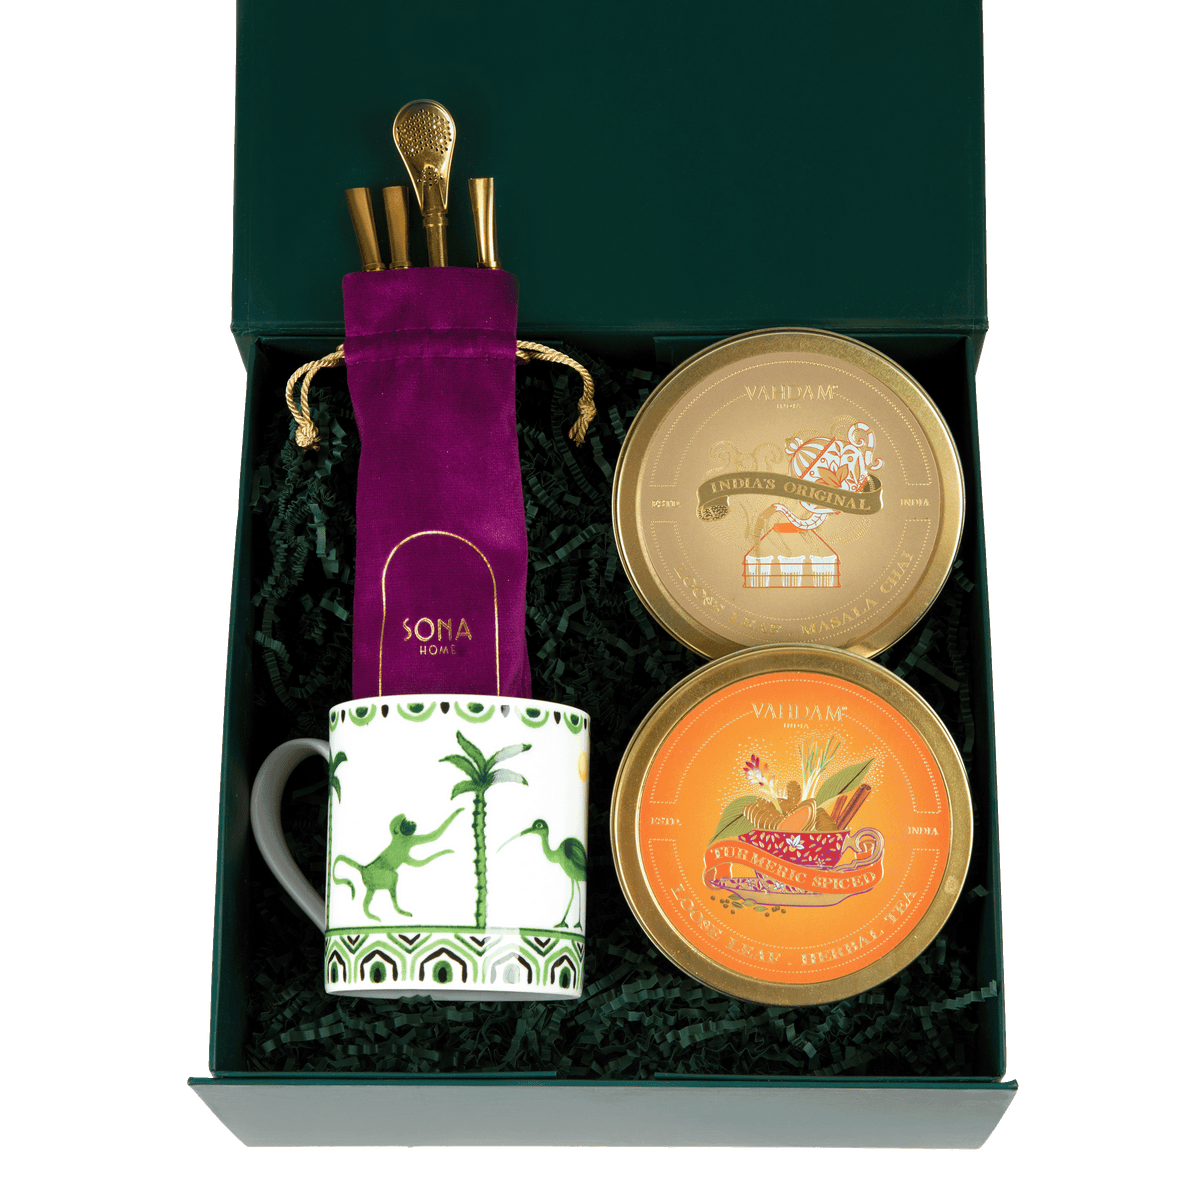 SONA Home x VAHDAM India Tea Gift Box